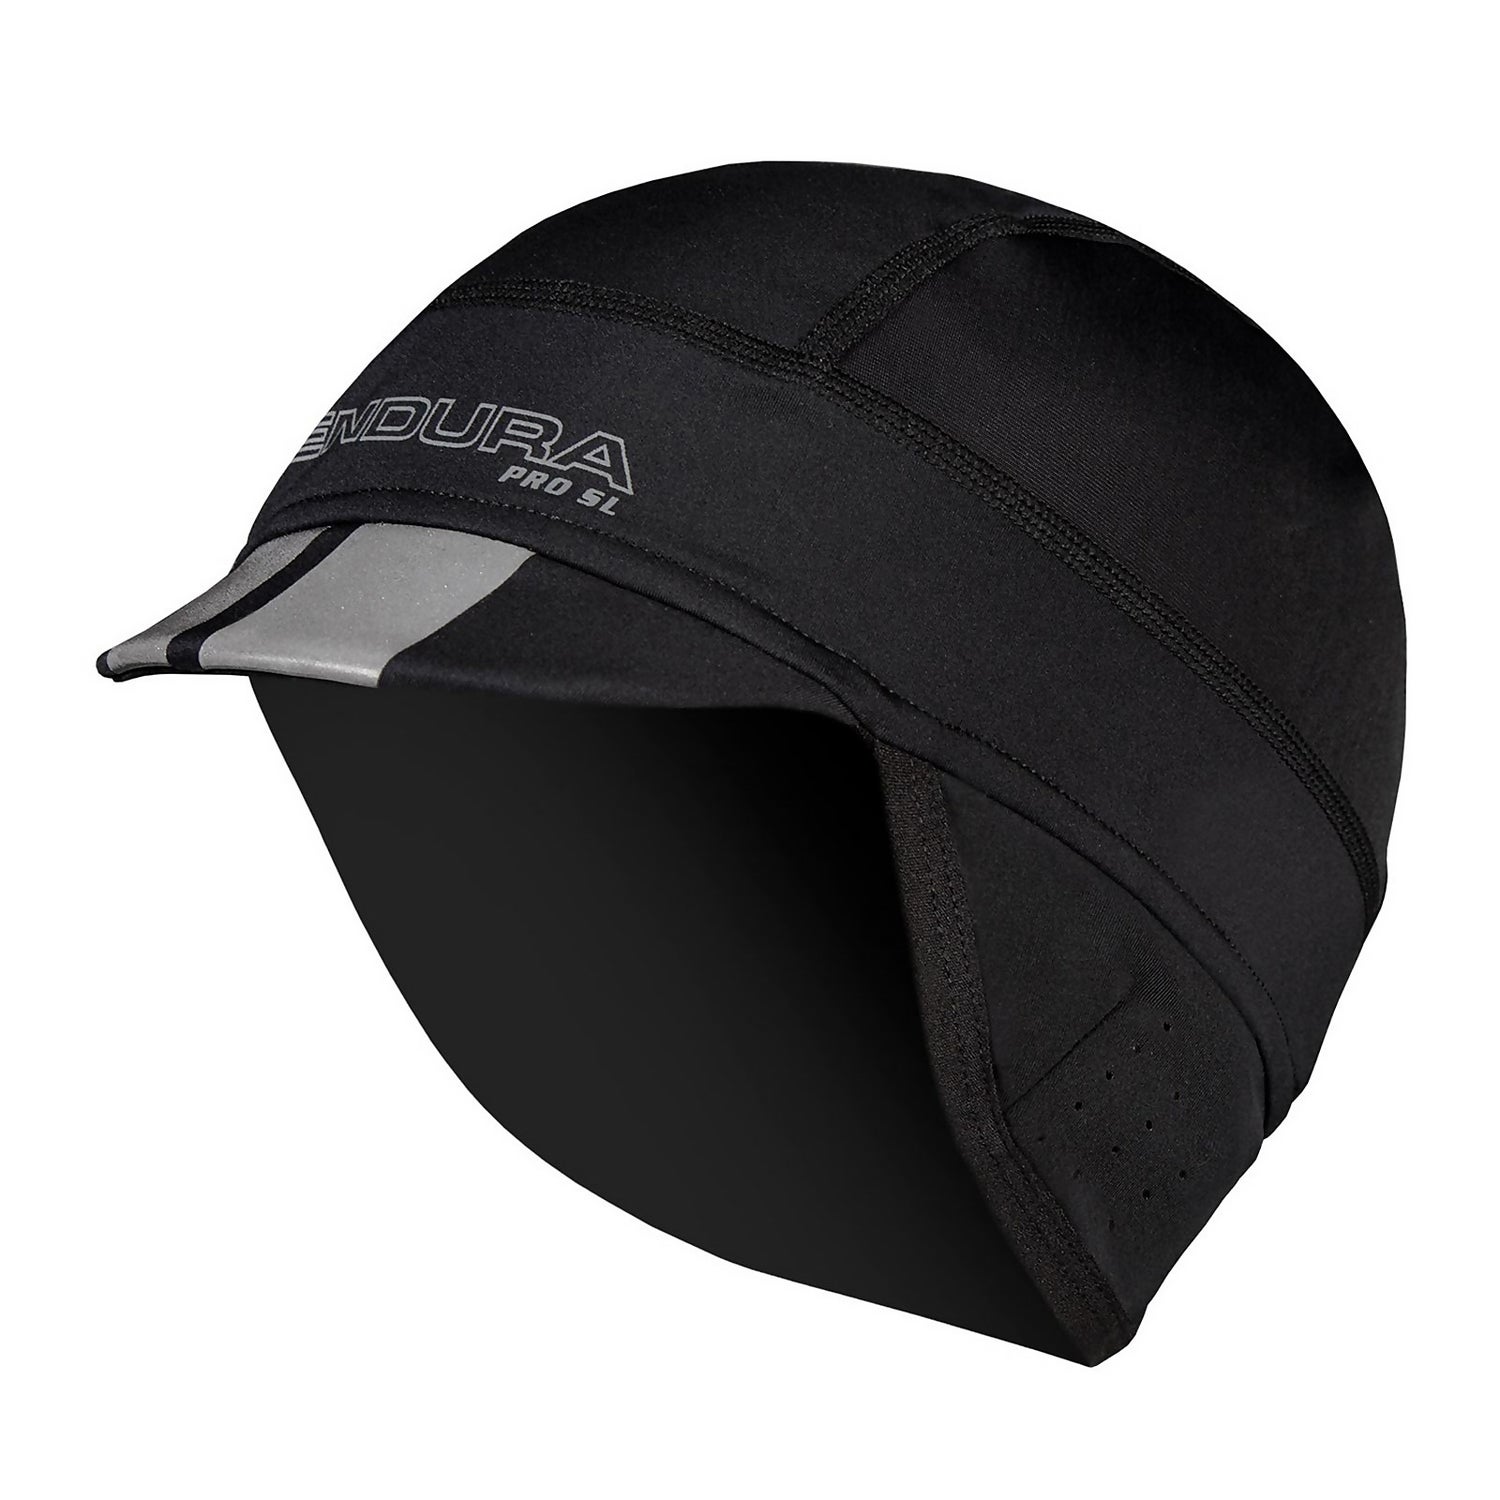 Pro SL Winter Cap - Black - S-M